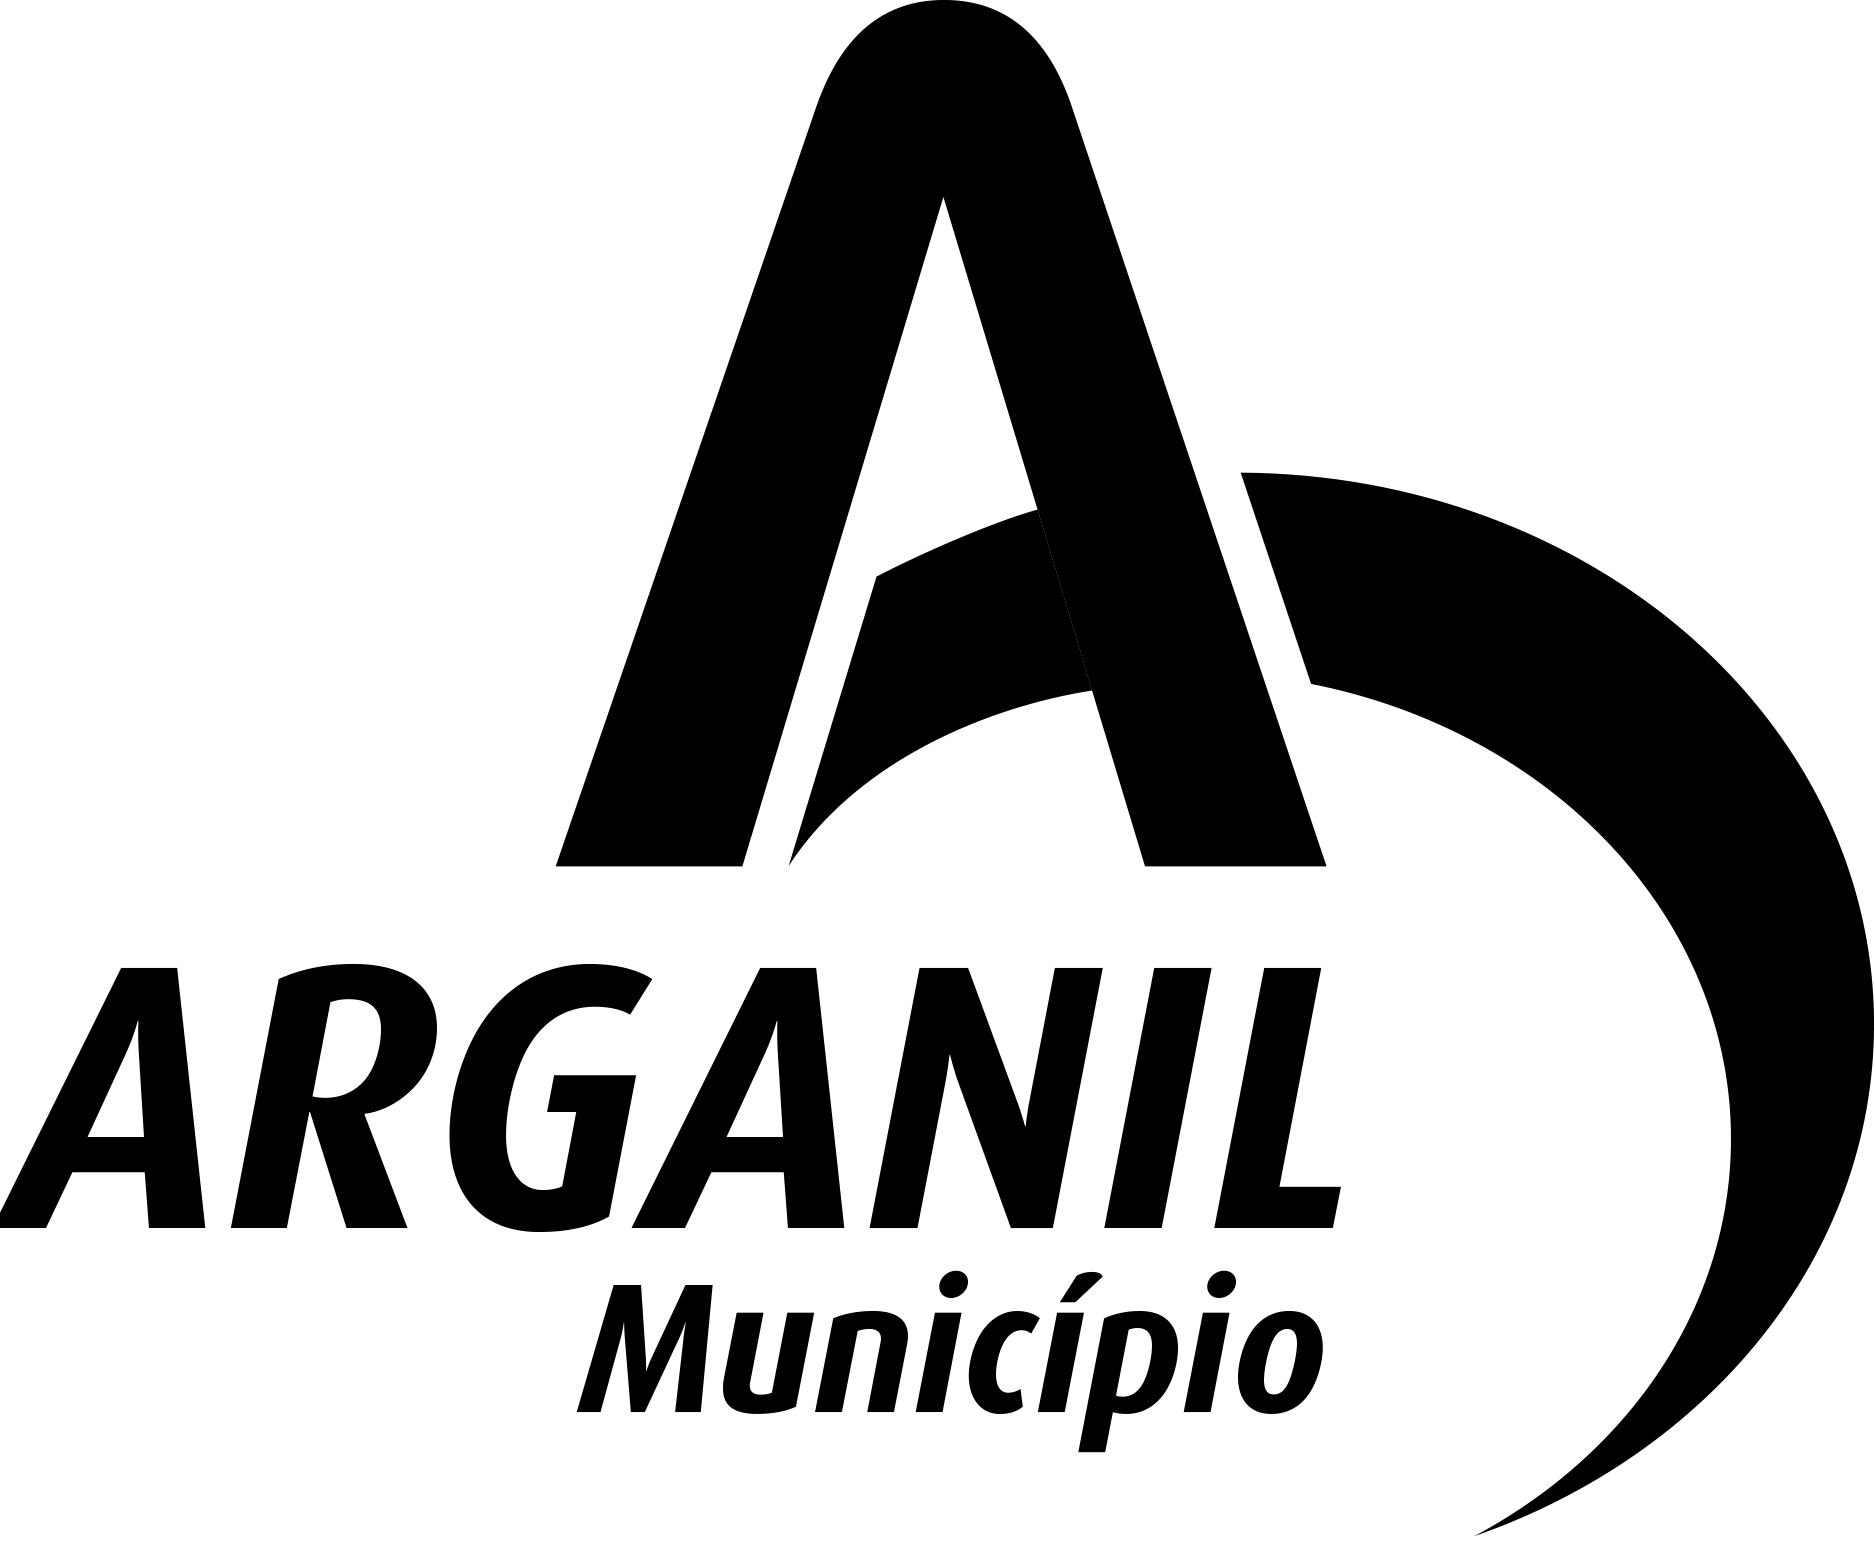 Logo Município Arganil Black